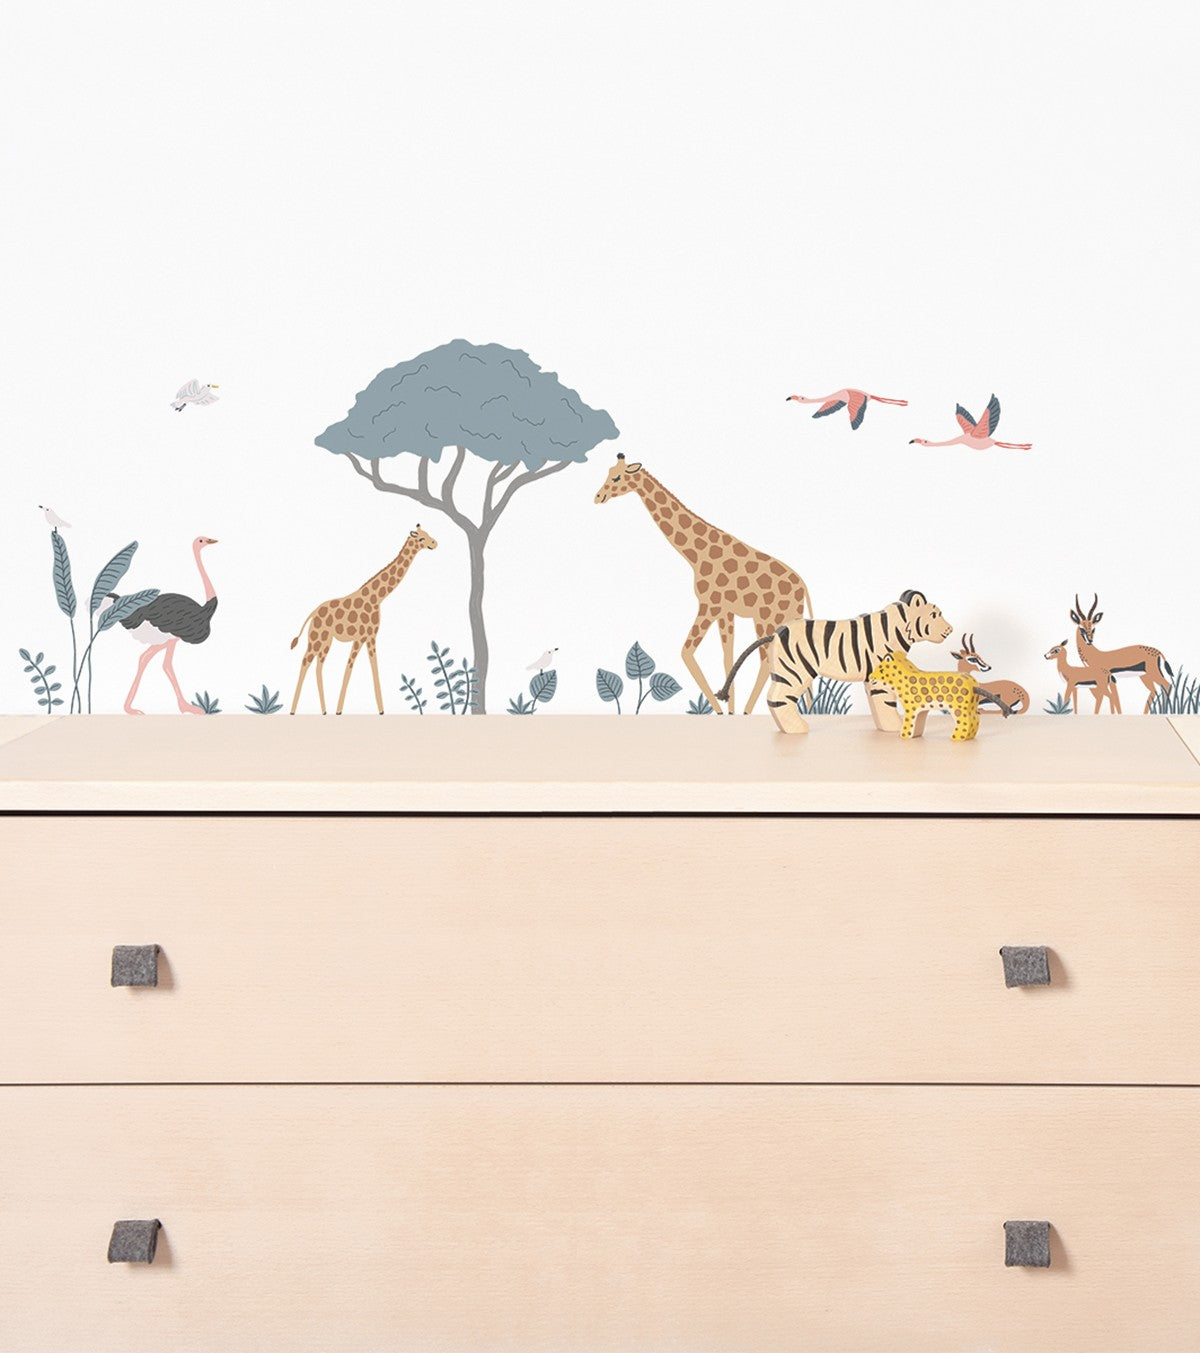 Autocolantes animais da savana - Girafa, gazela, avestruz - TANZÂNIA